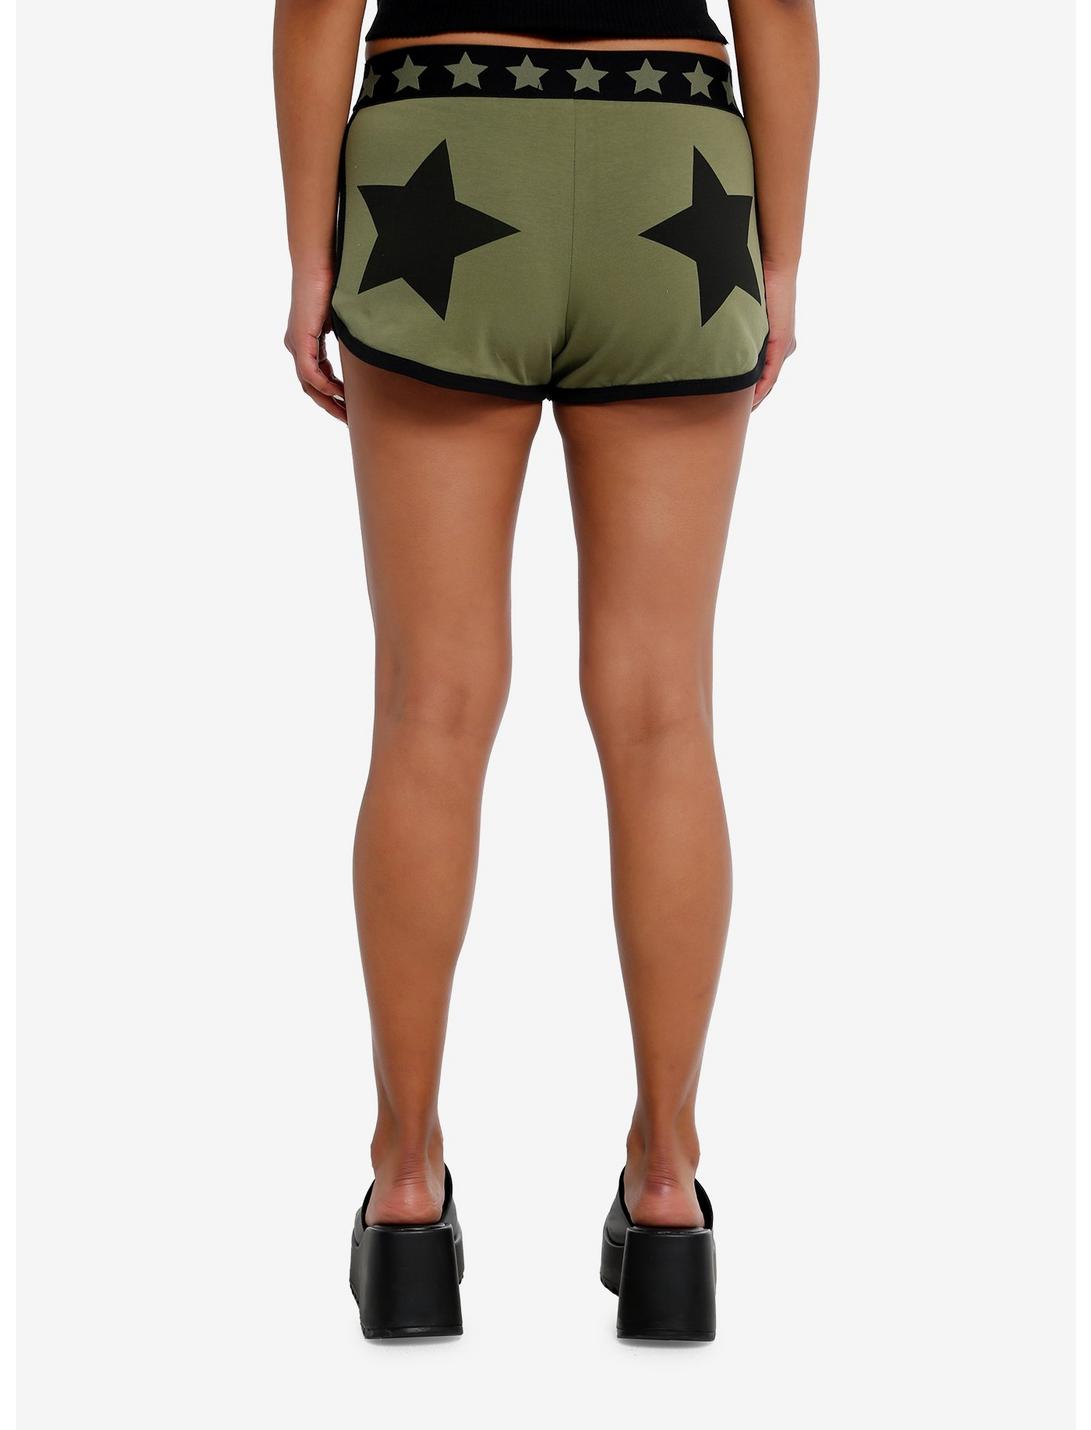 Green & Black Star Girls Lounge Shorts, ARMY GREEN, hi-res